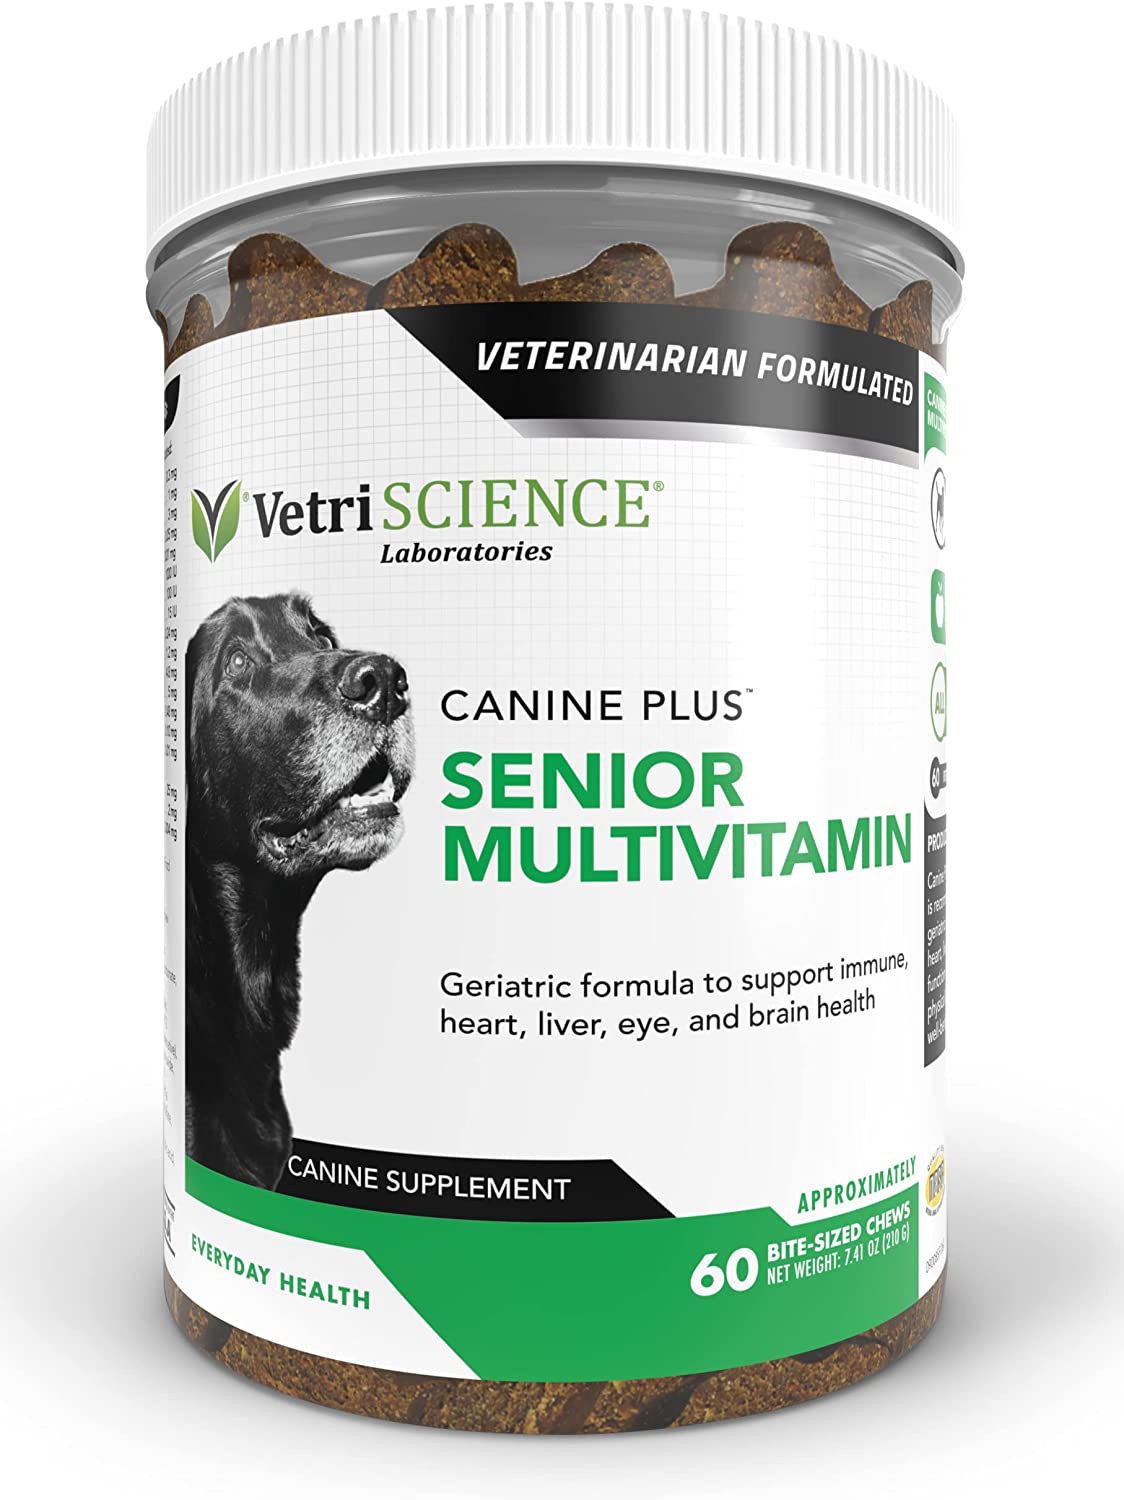 4. VetriScience Canine Plus Multivitamin for Senior Dogs